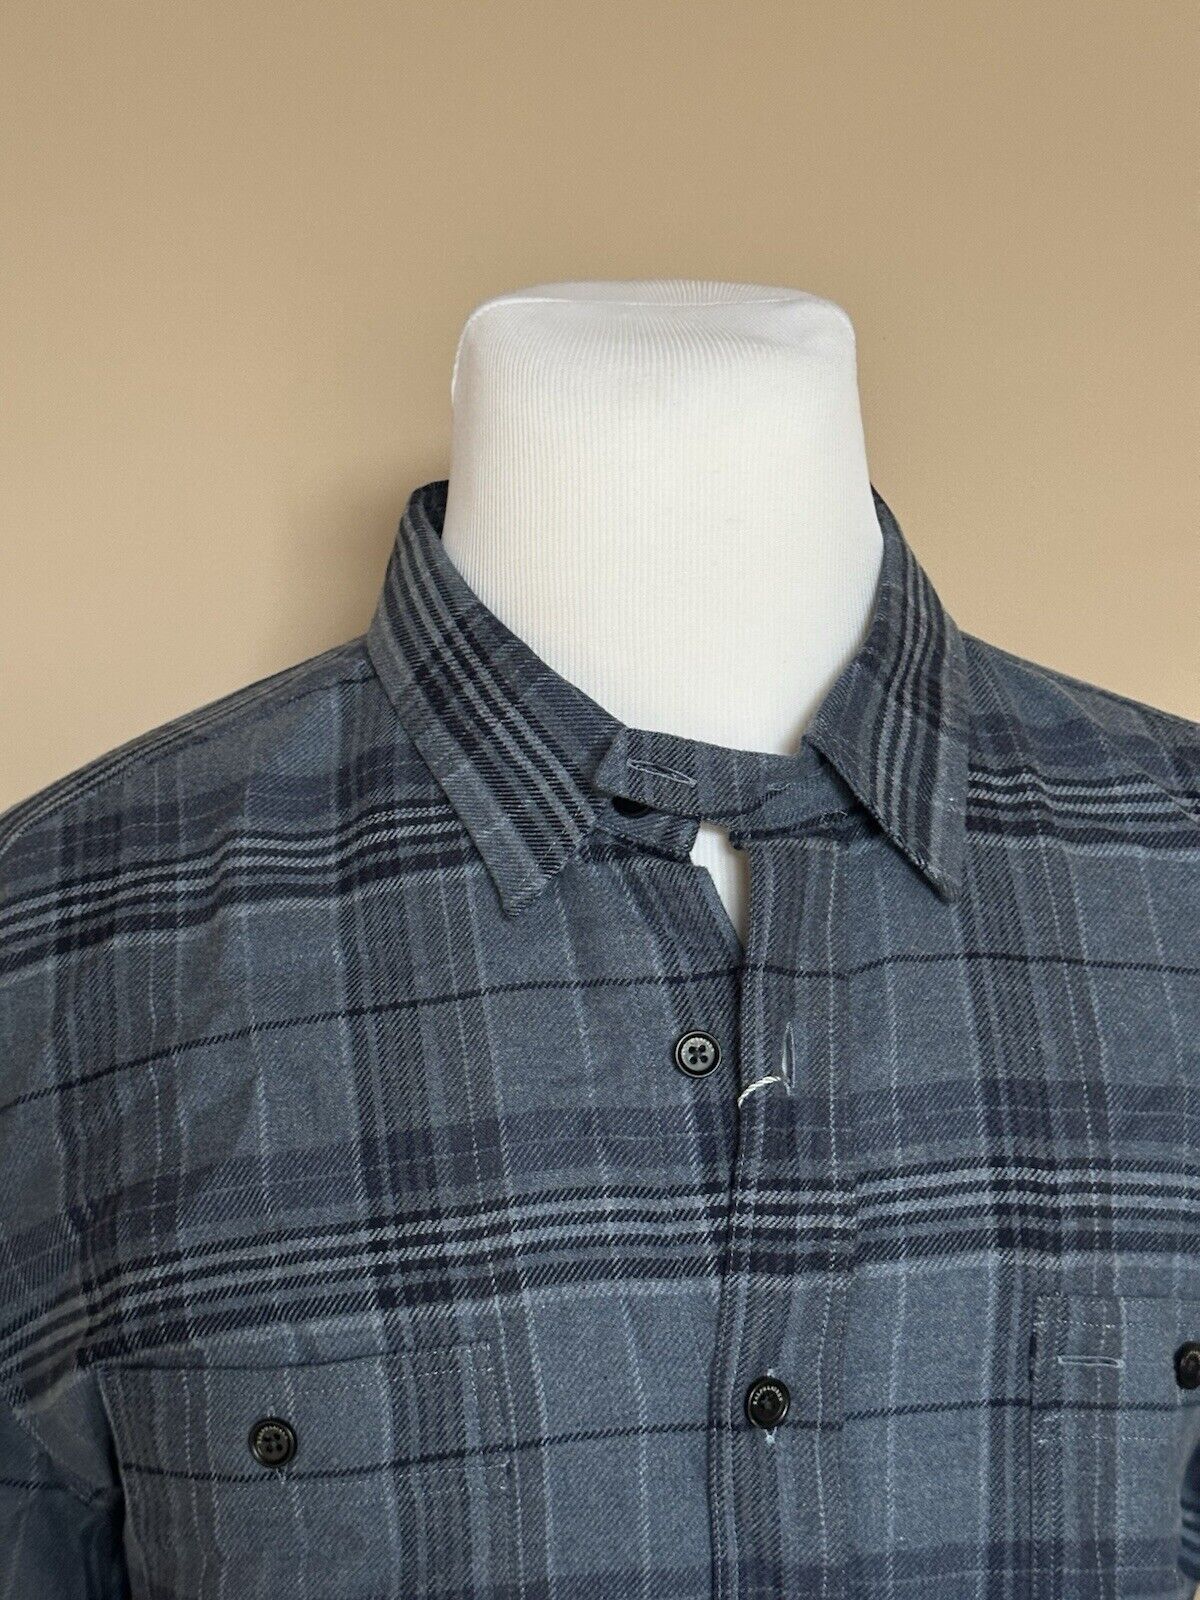 Ralph Lauren Purple Label Langley Plaid Cotton Men's Shirt 2XL Italy NWT $595